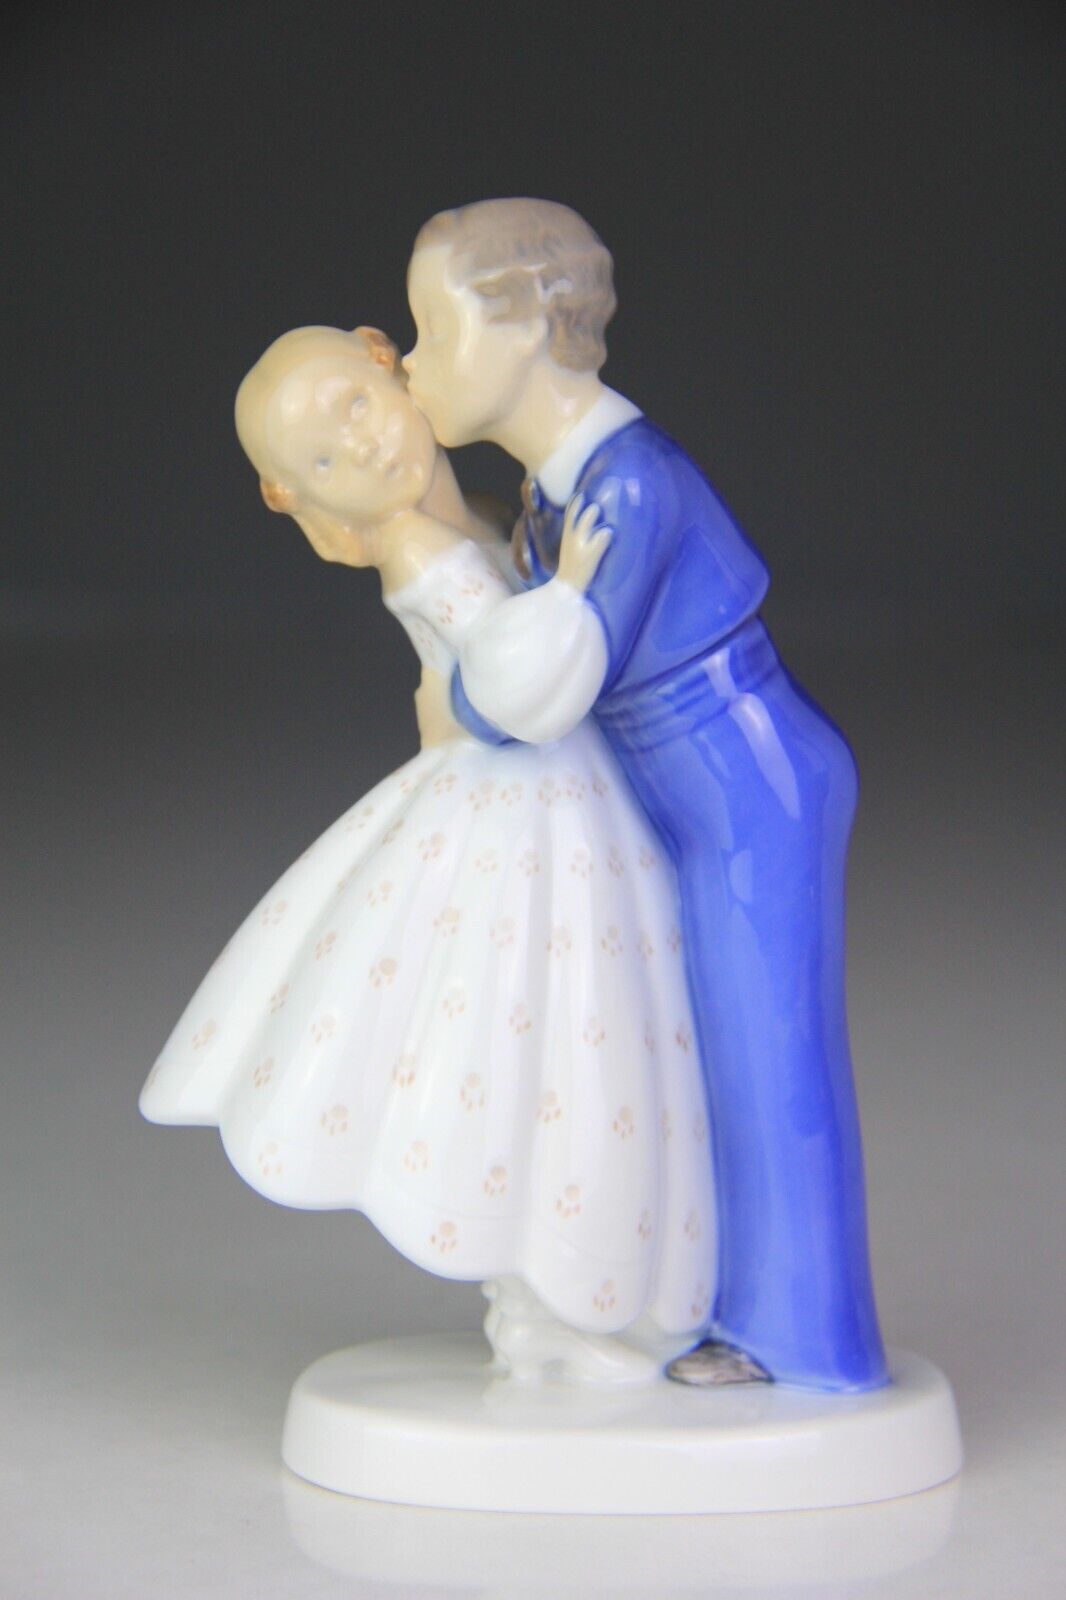 Vintage Bing & Grondahl Figurine Youthful Boldness First Kiss #2162 1958-1962